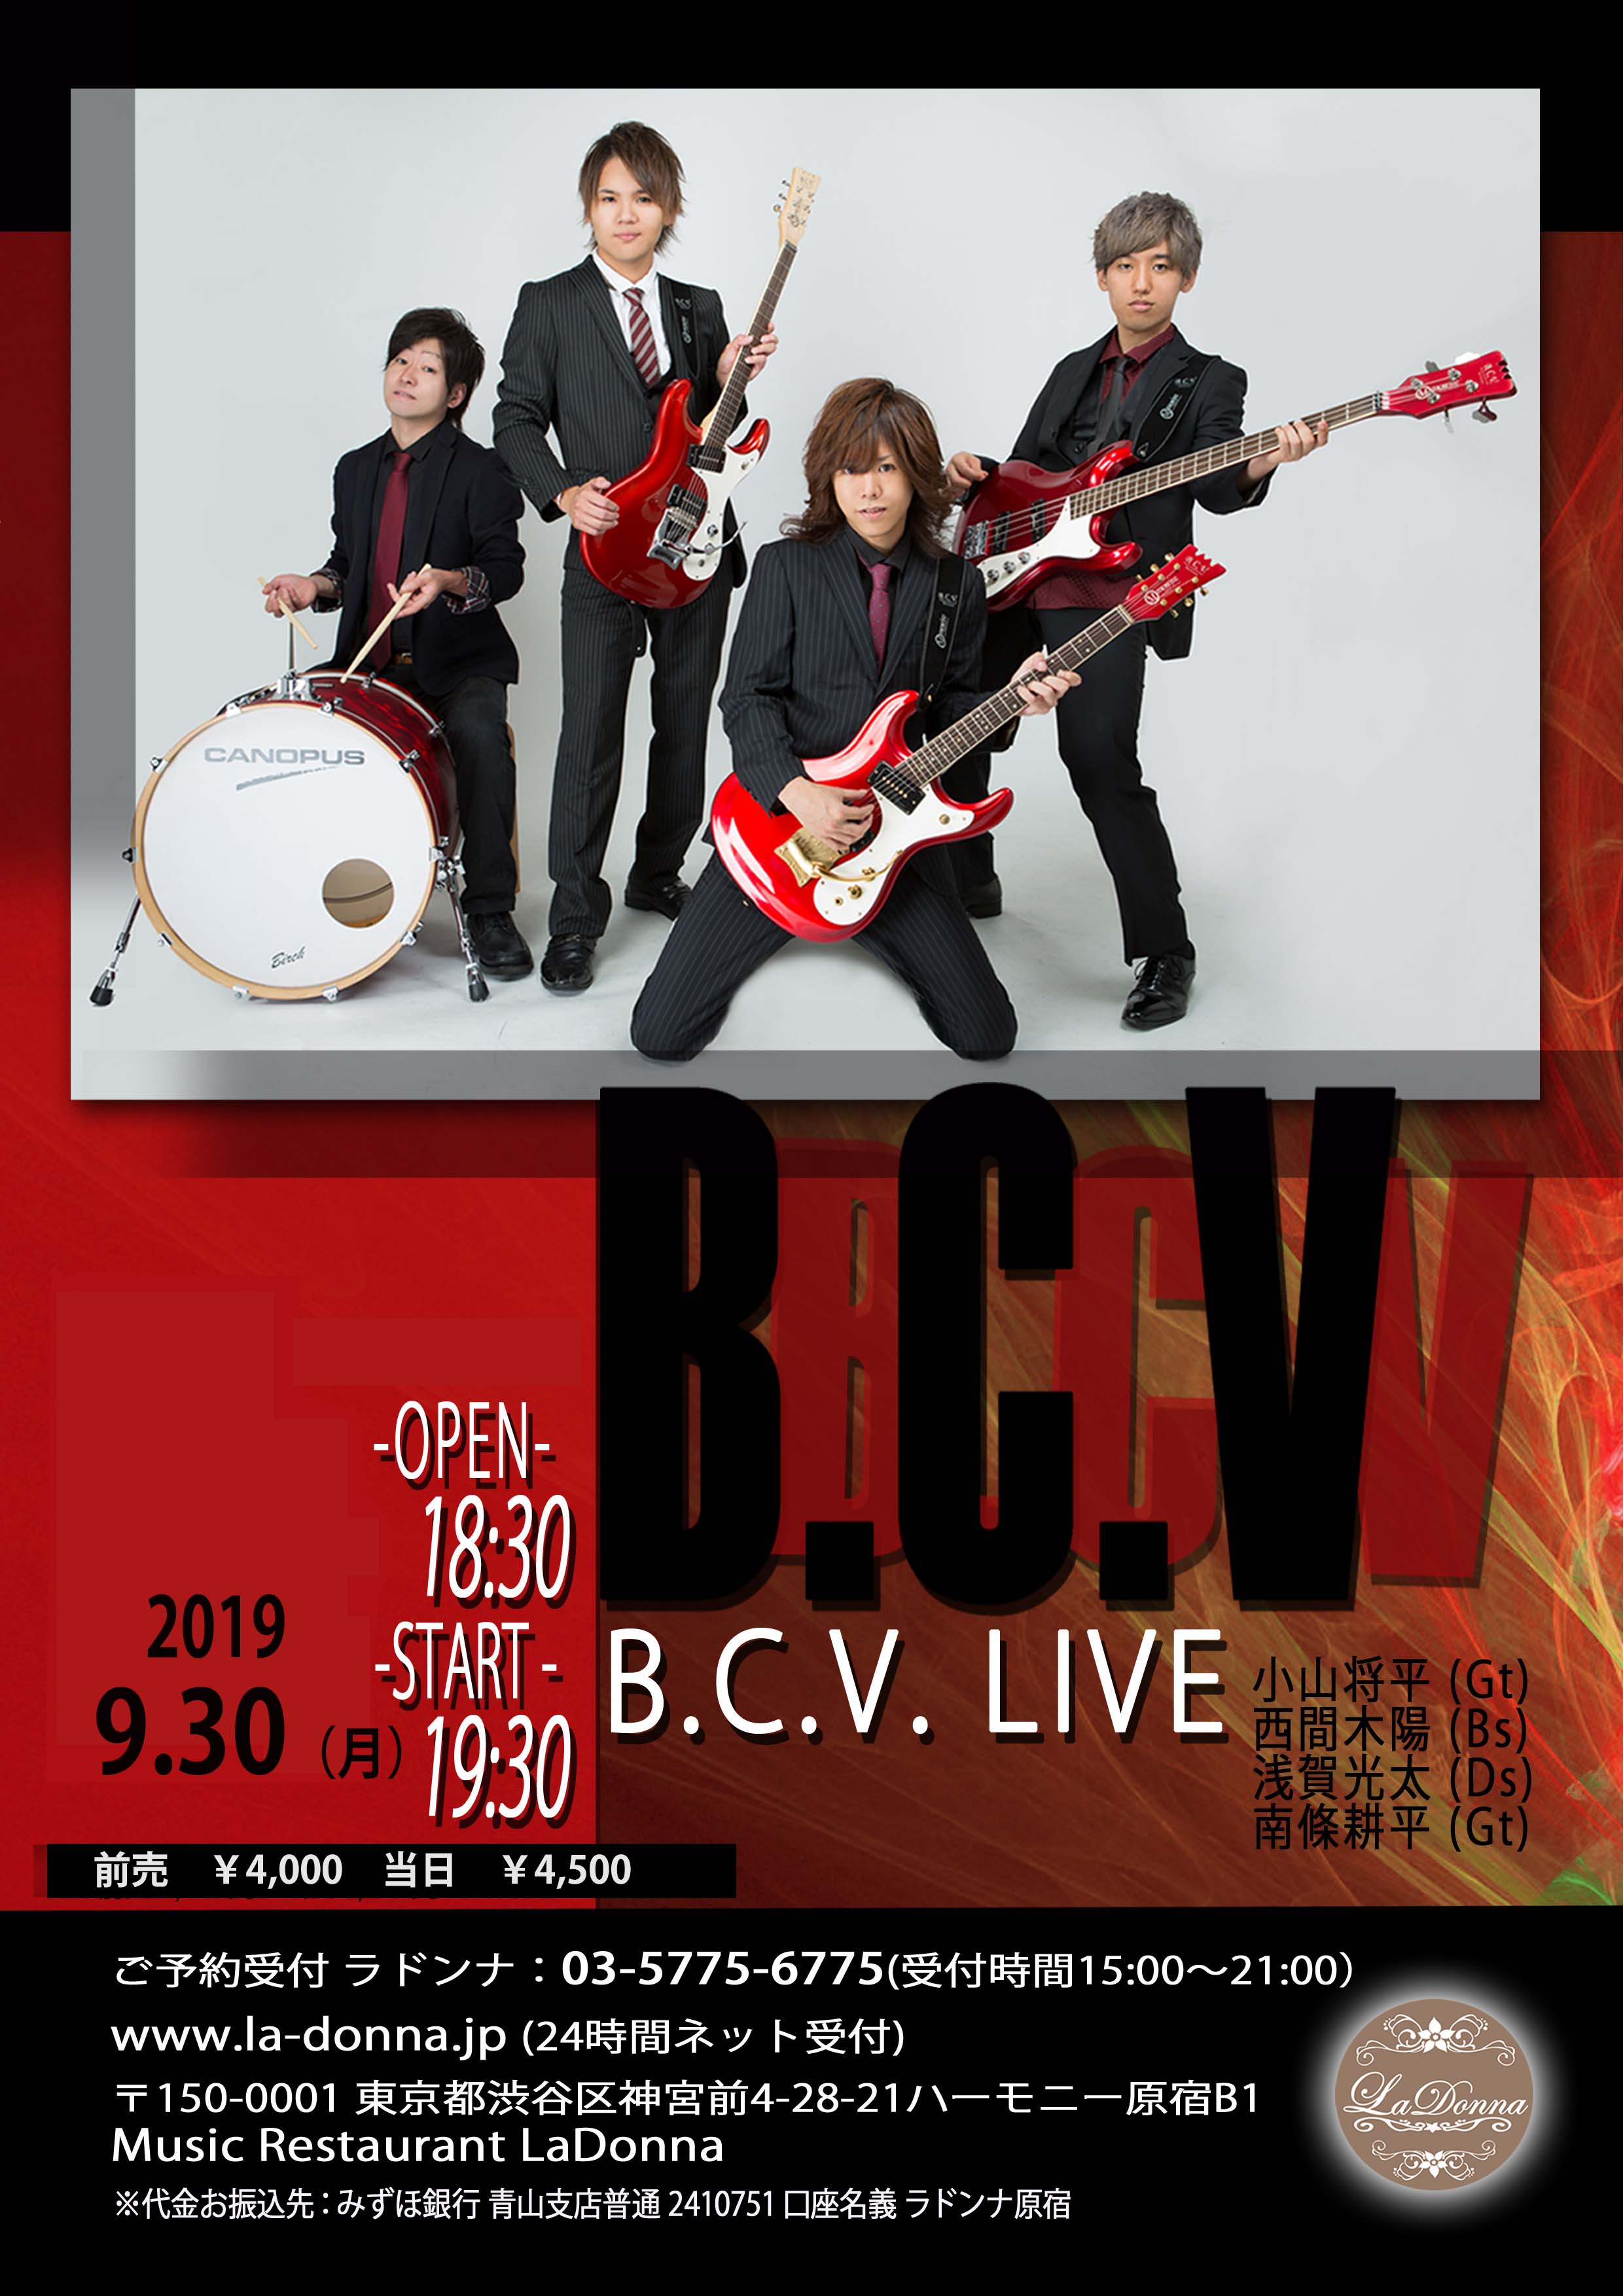 B.C.V. LIVE